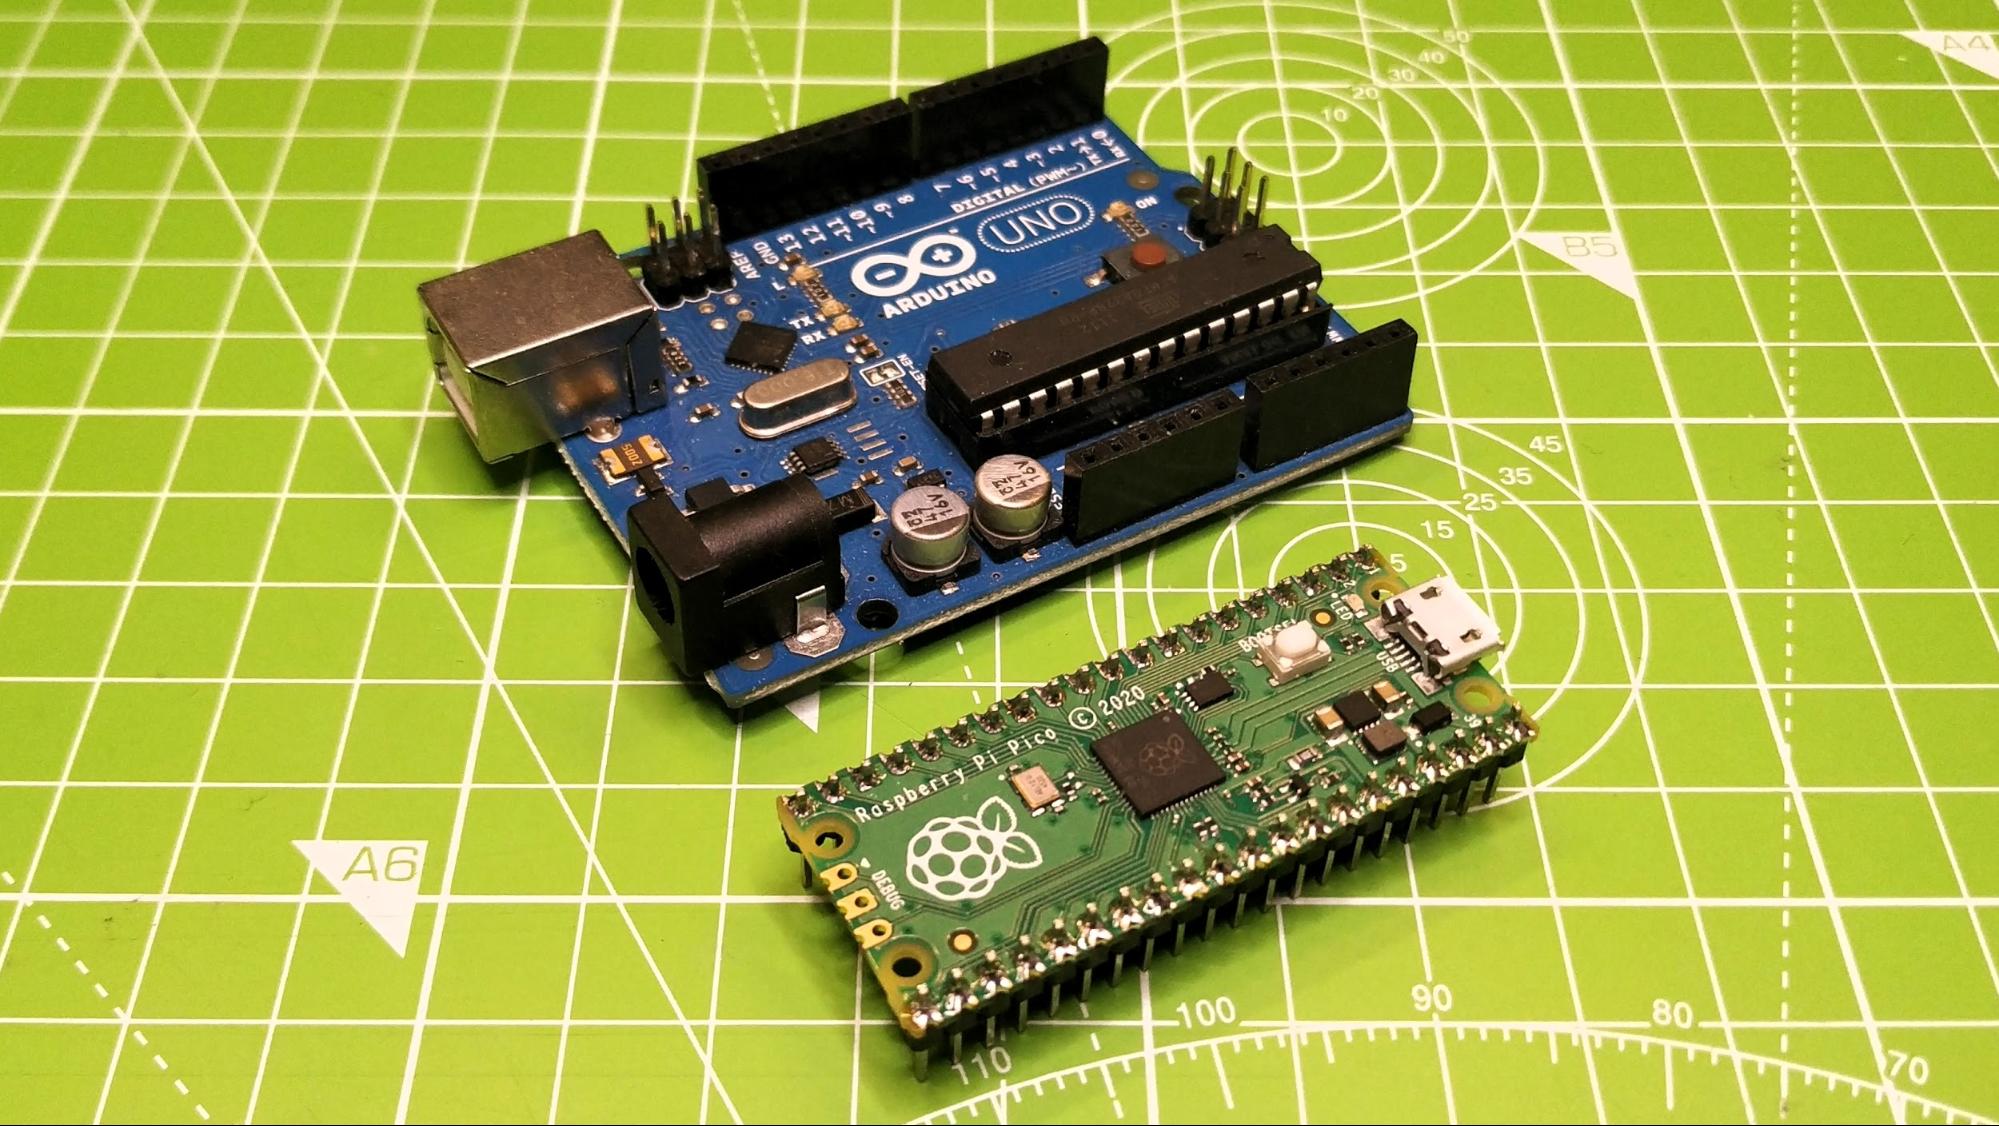 Raspberry Pi Pico W and Adafruit IO with Arduino IDE